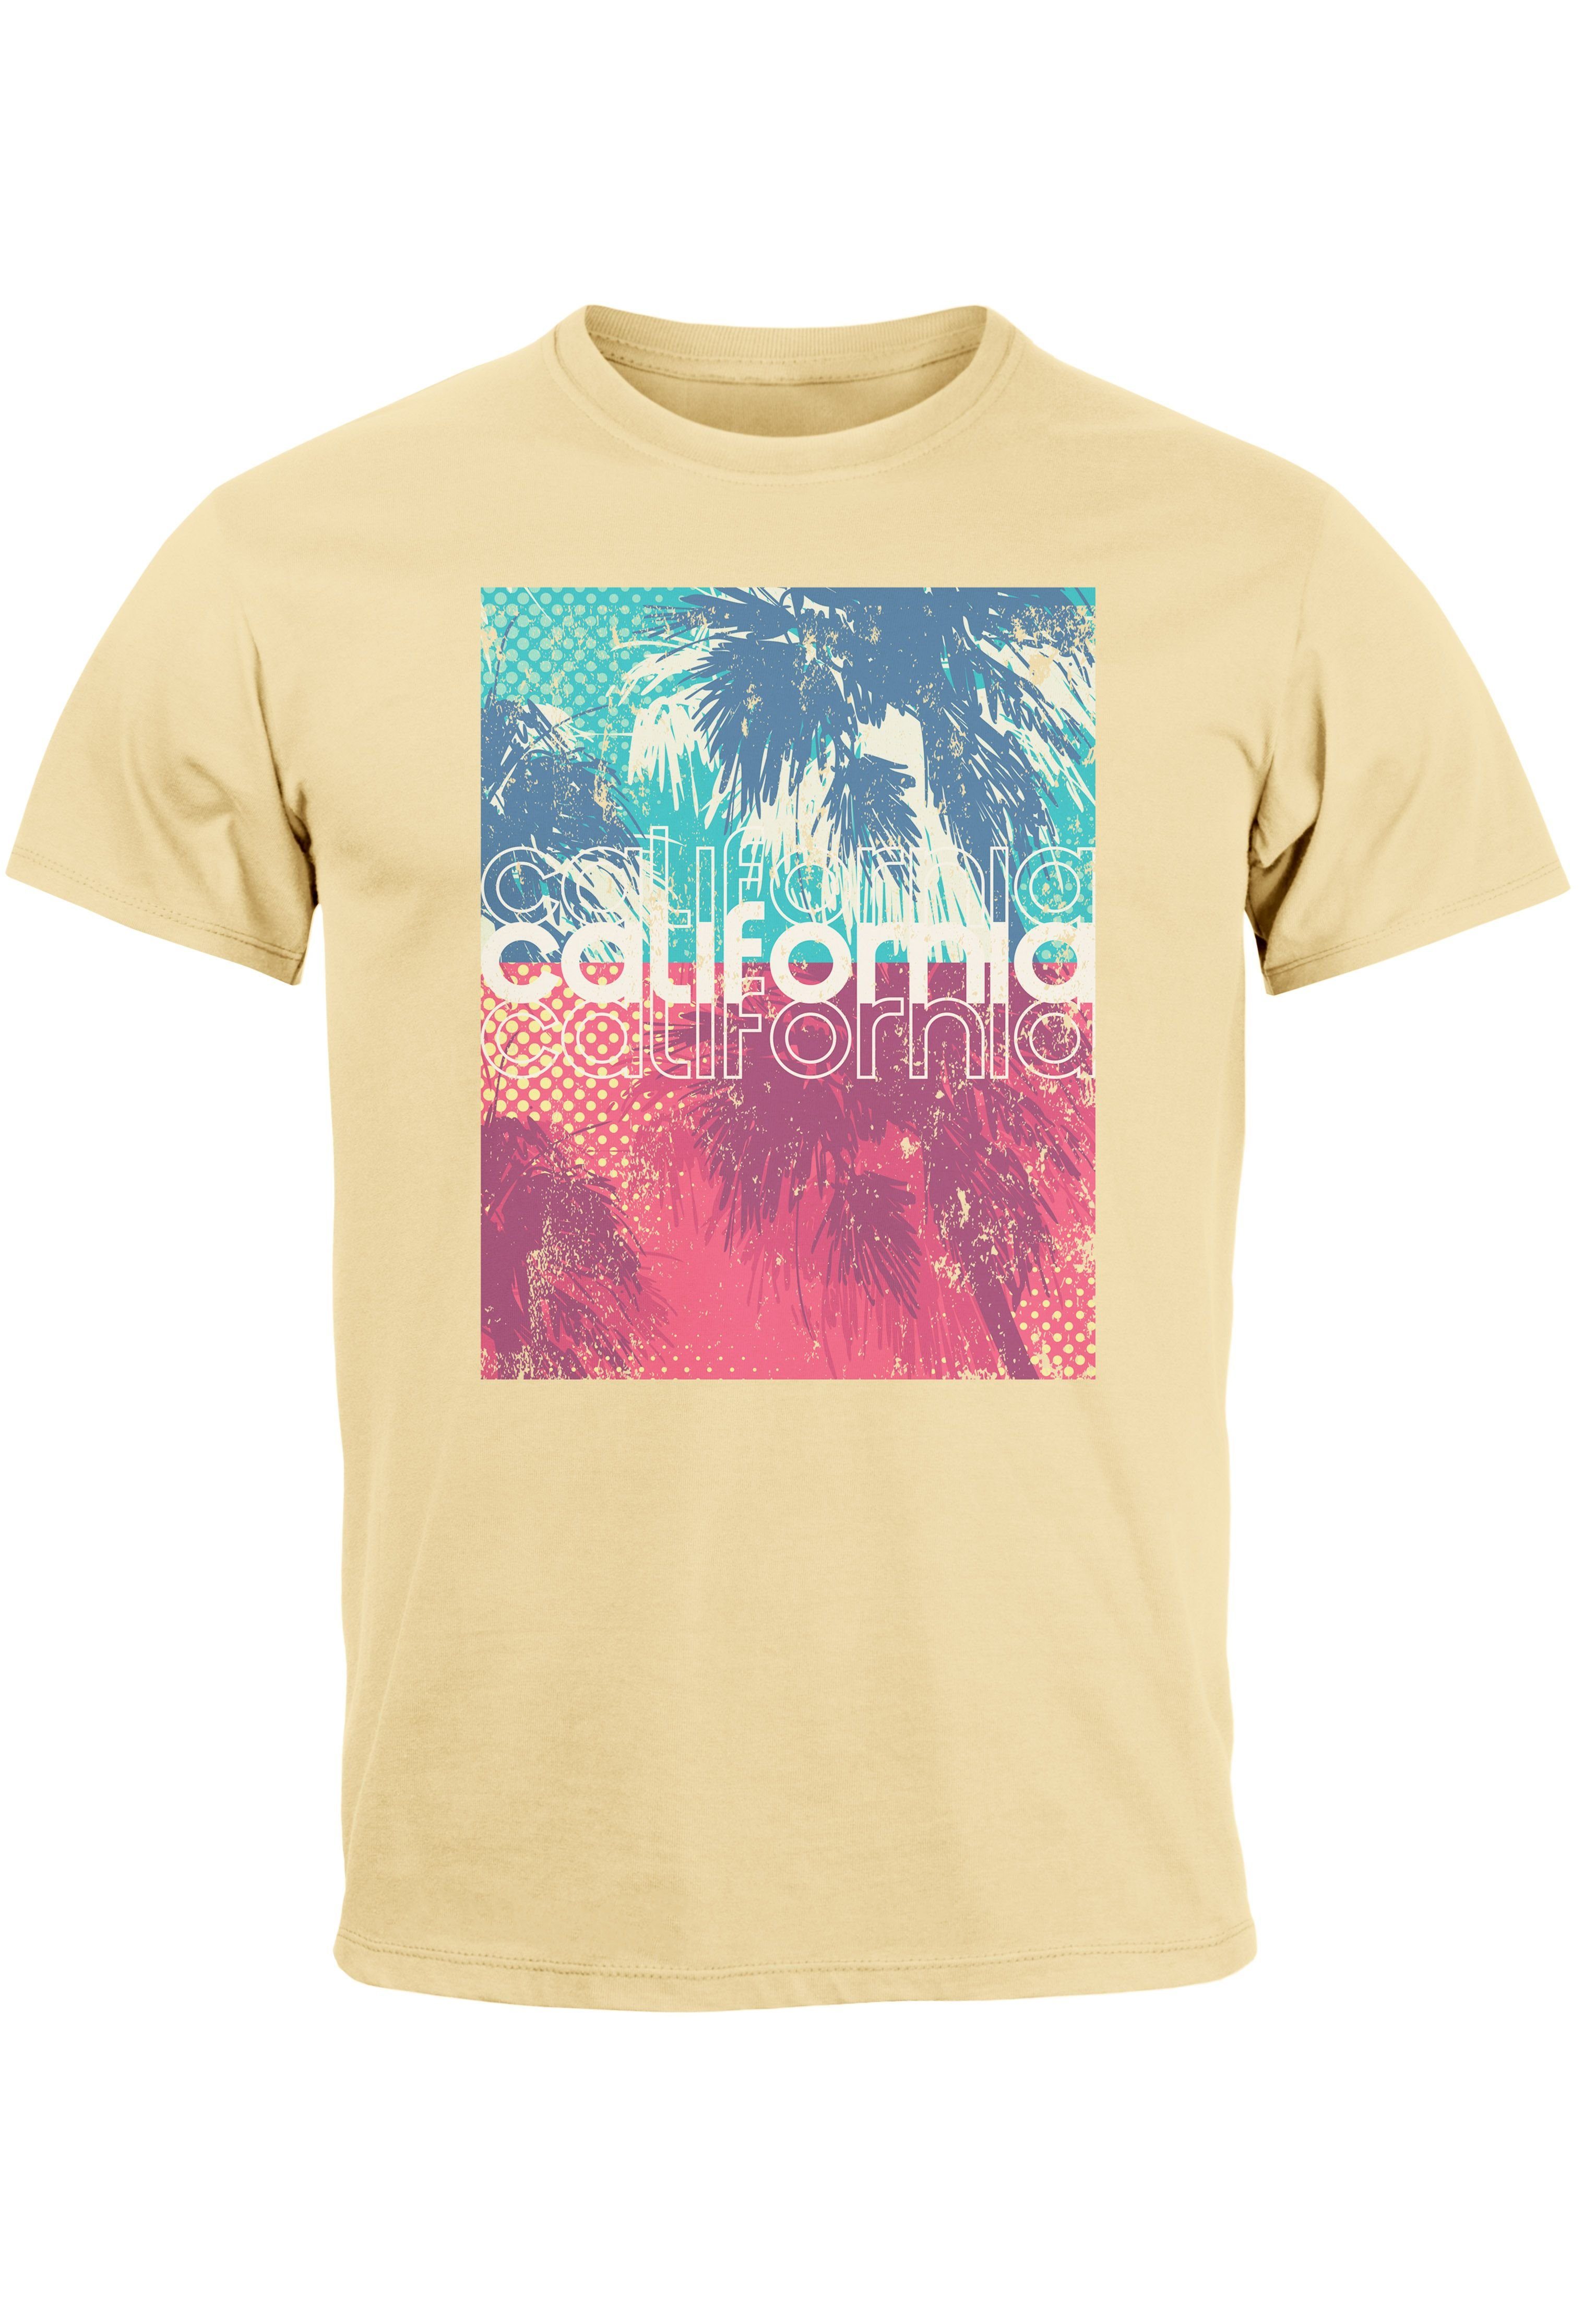 Neverless Print-Shirt Herren T-Shirt Top California Palmen Sommer Foto Print Aufdruck Abstra mit Print natur